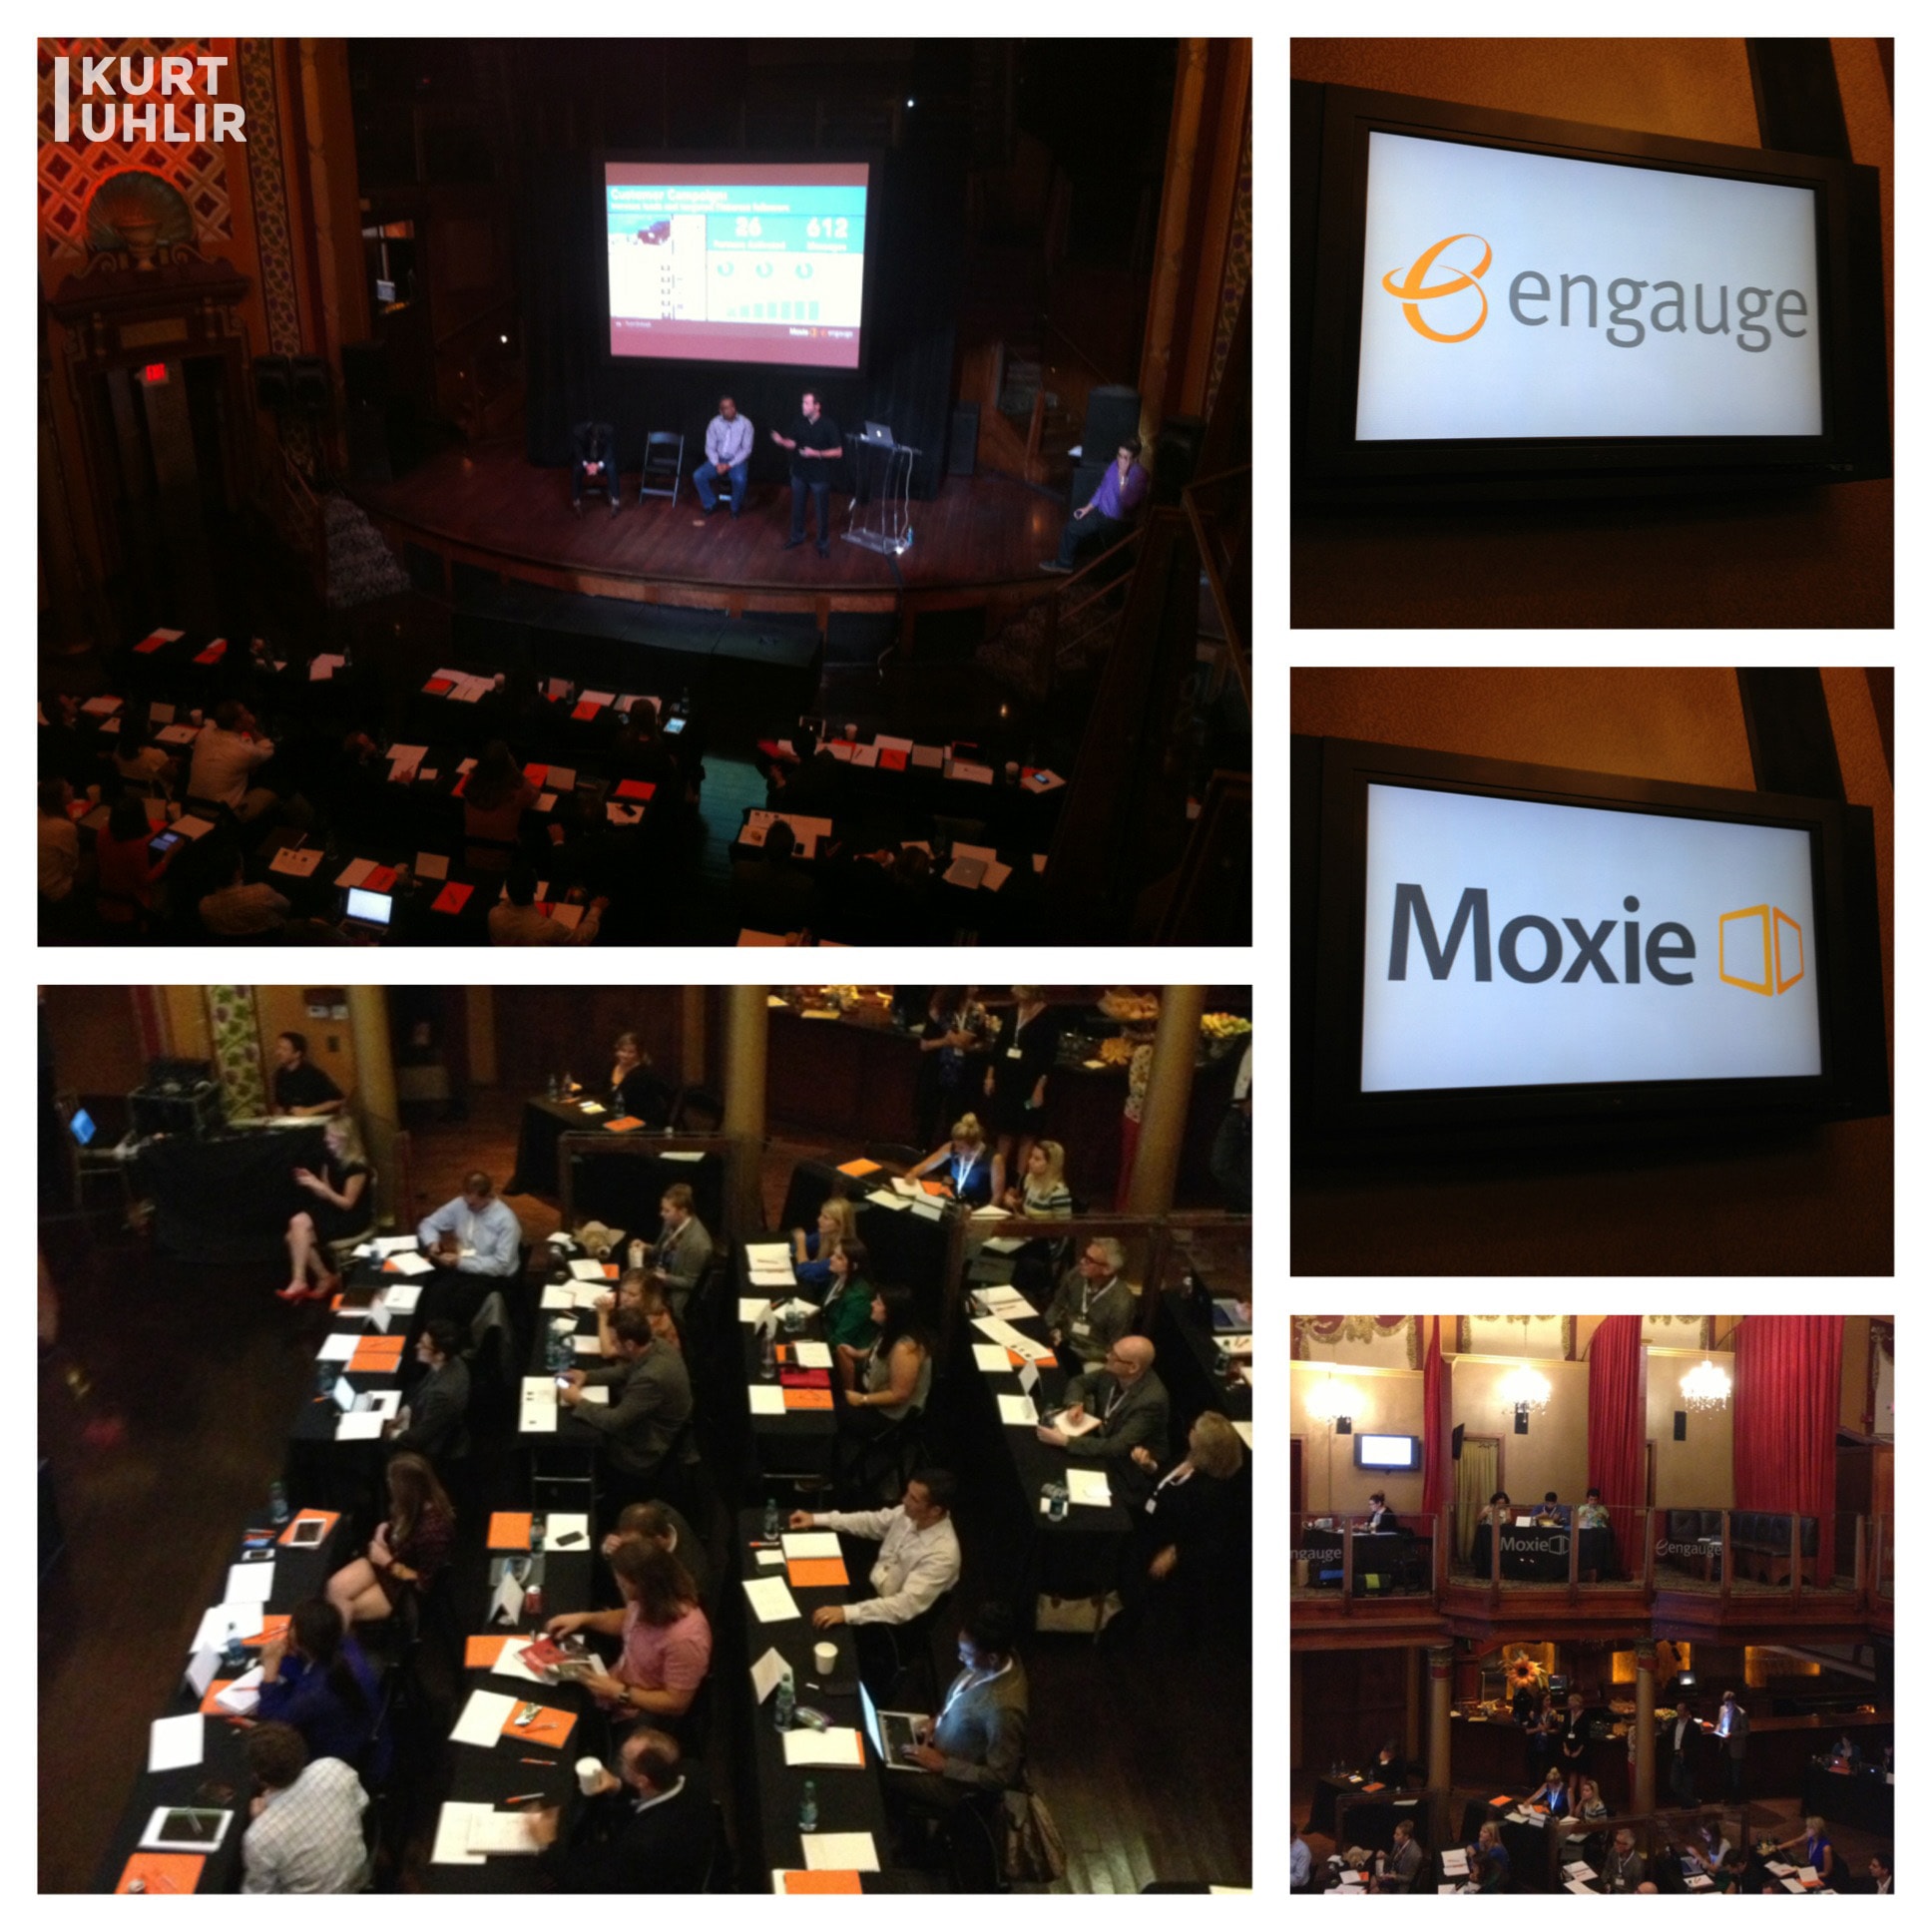 Kurt Uhlir presenting at Moxie Engauge DIG Day 2013 on Influencer Marketing